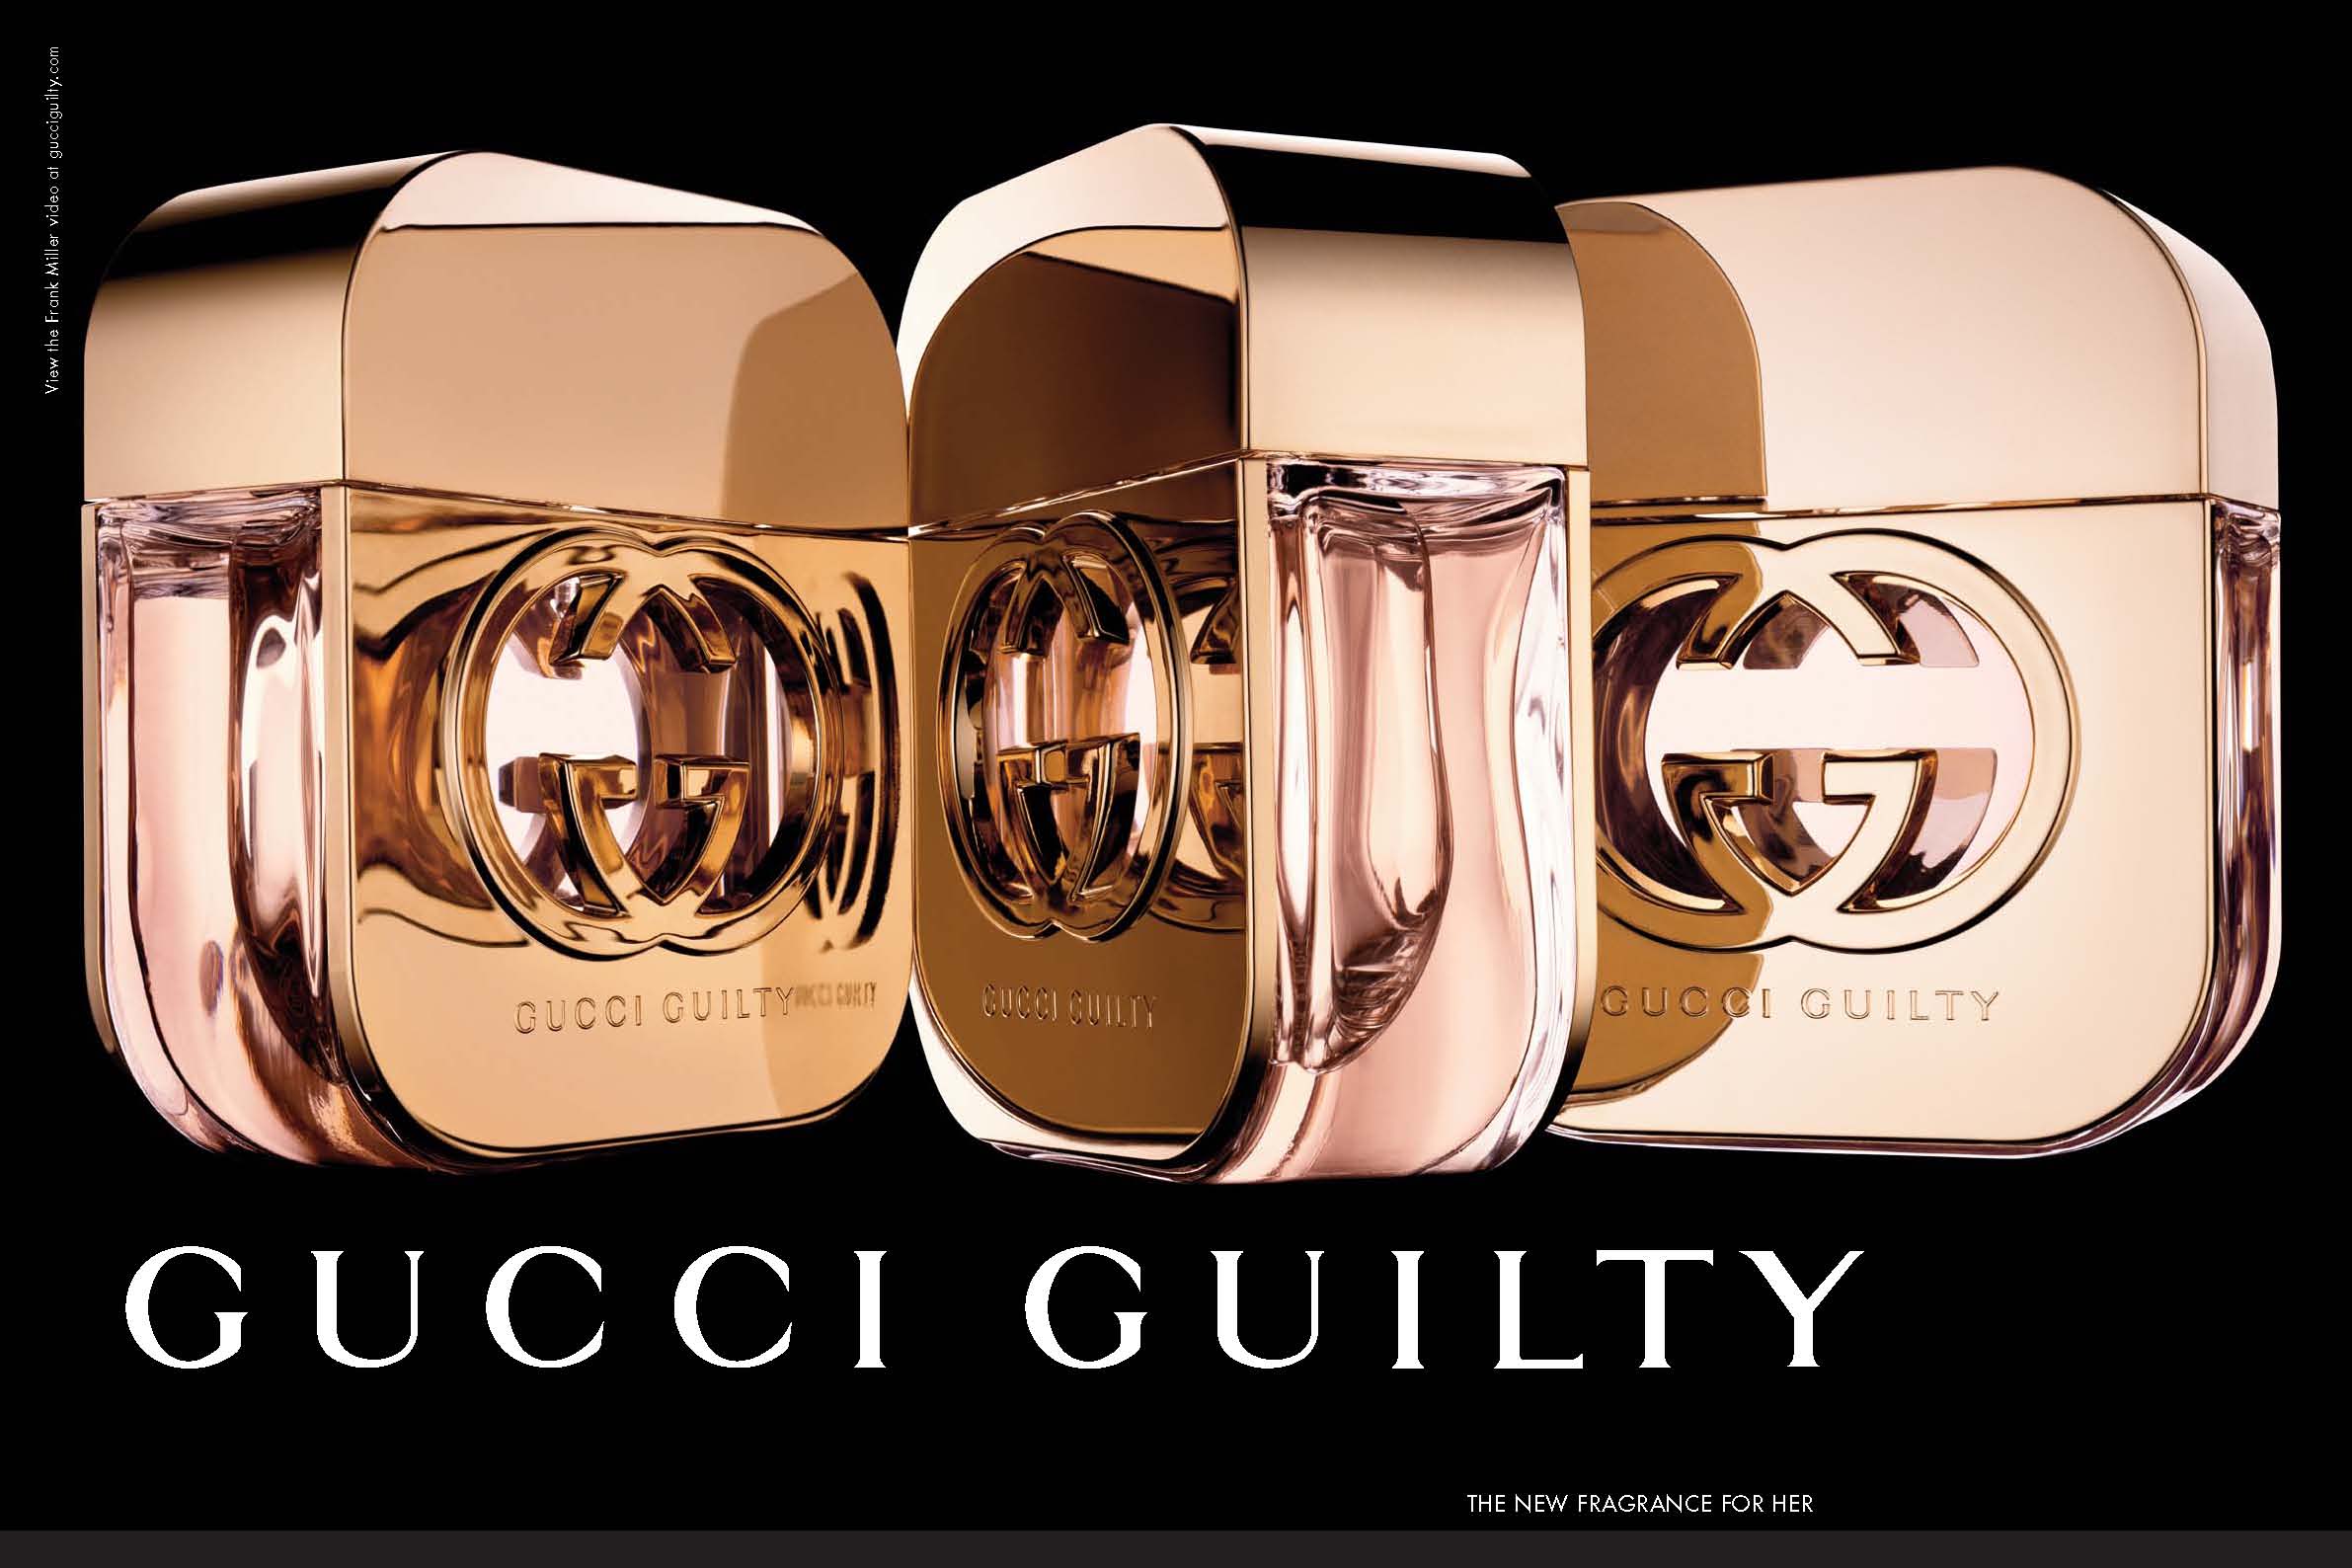 gucci guilty 2010